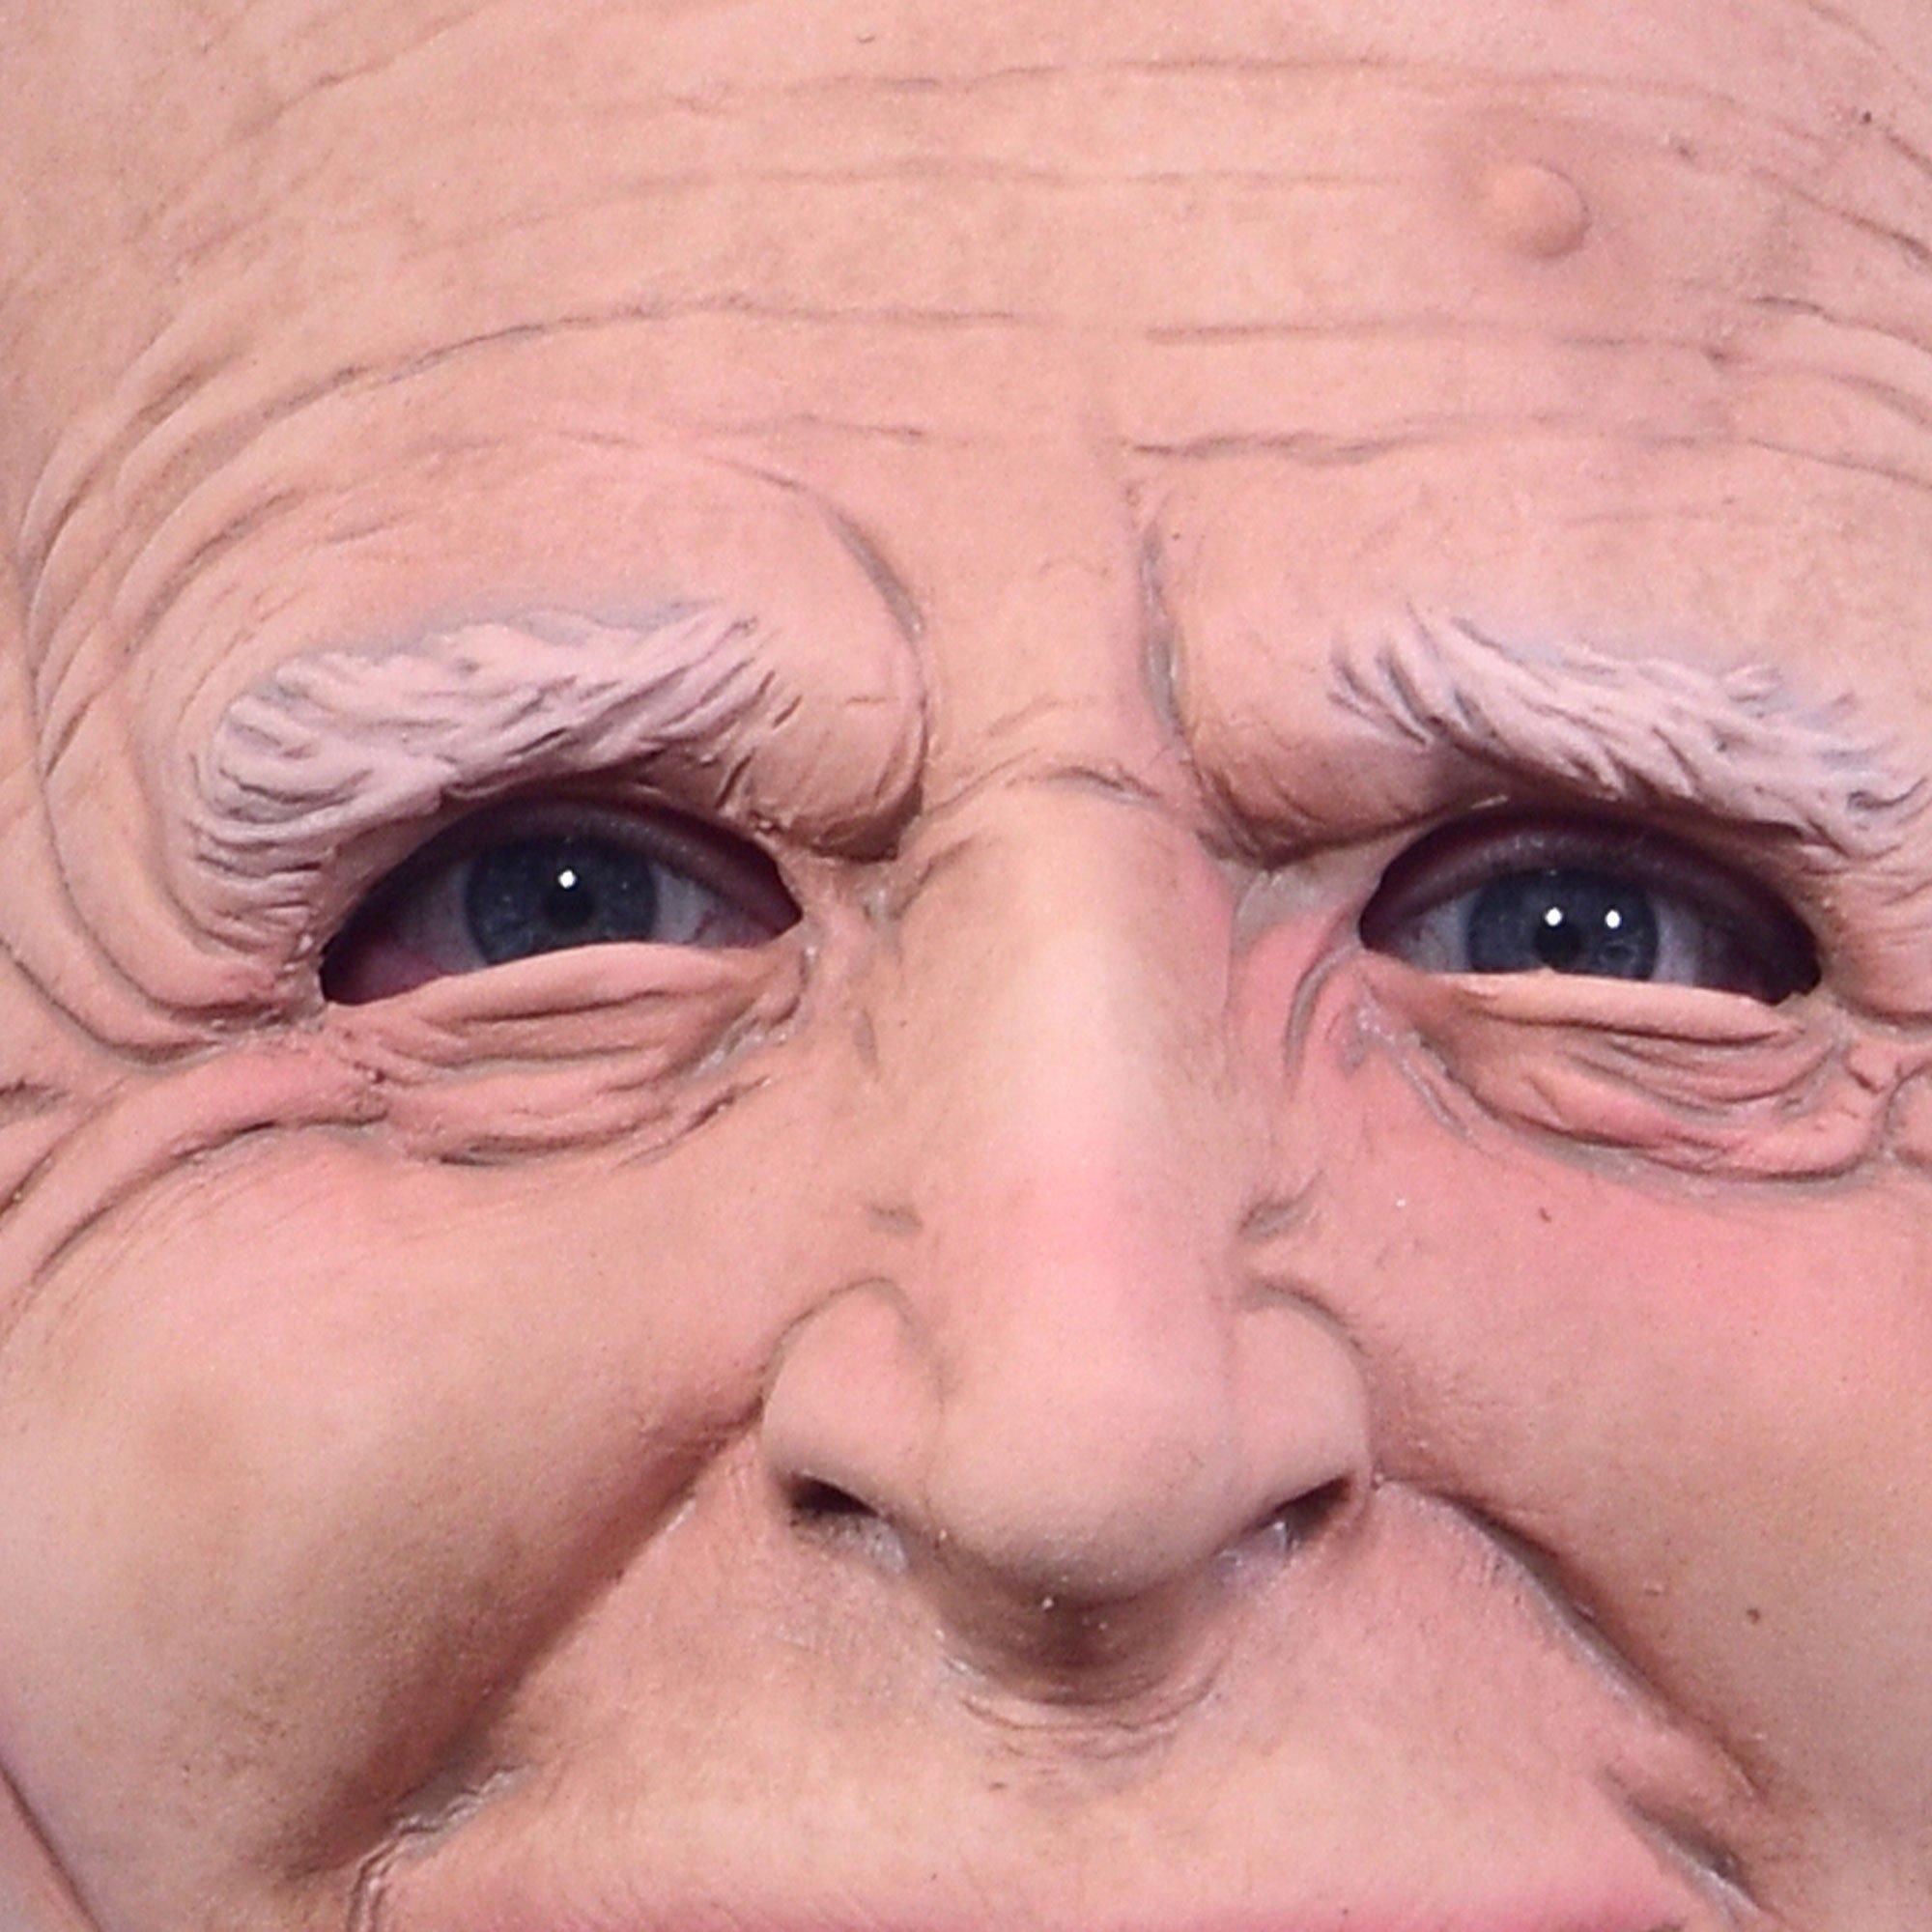 Adult Uncle Joe Latex Face Mask - Zagone Studios